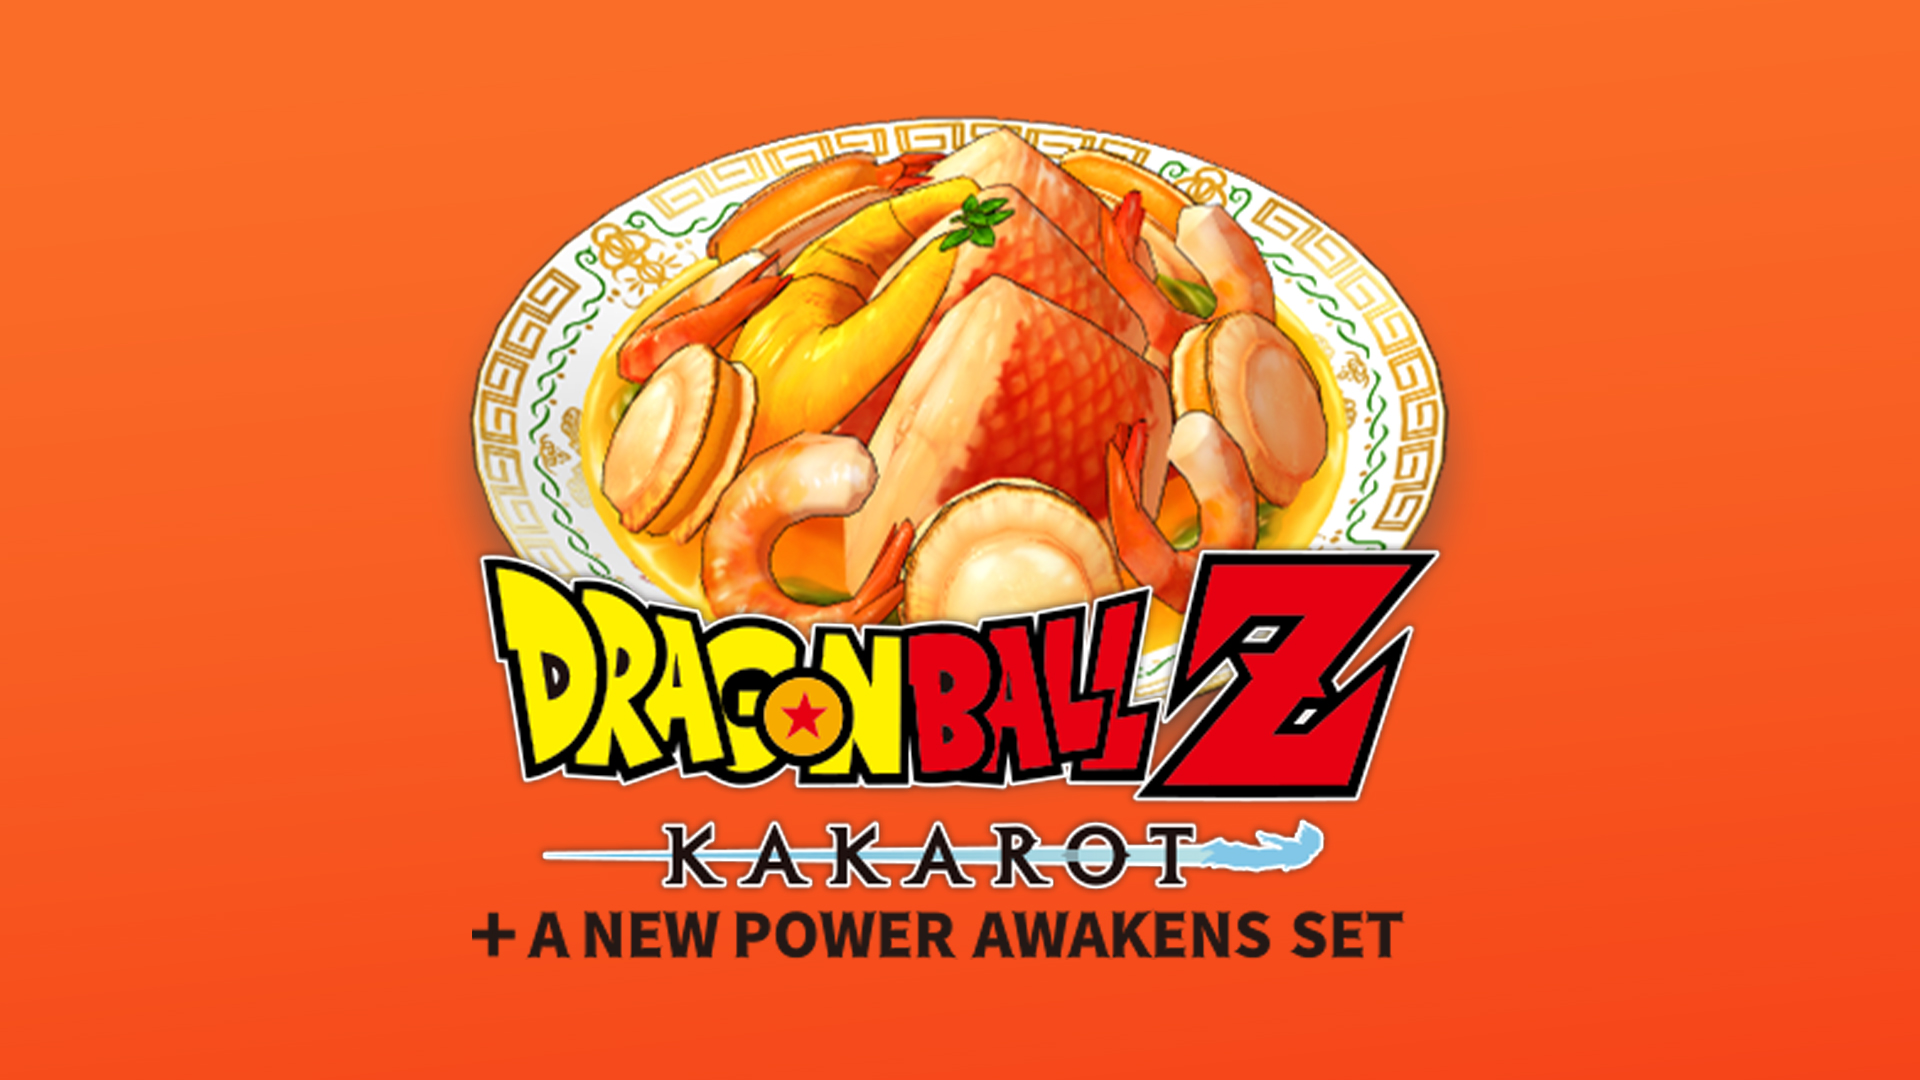 DRAGON BALL Z: KAKAROT + A NEW POWER AWAKENS SET - Sea Monster Soup